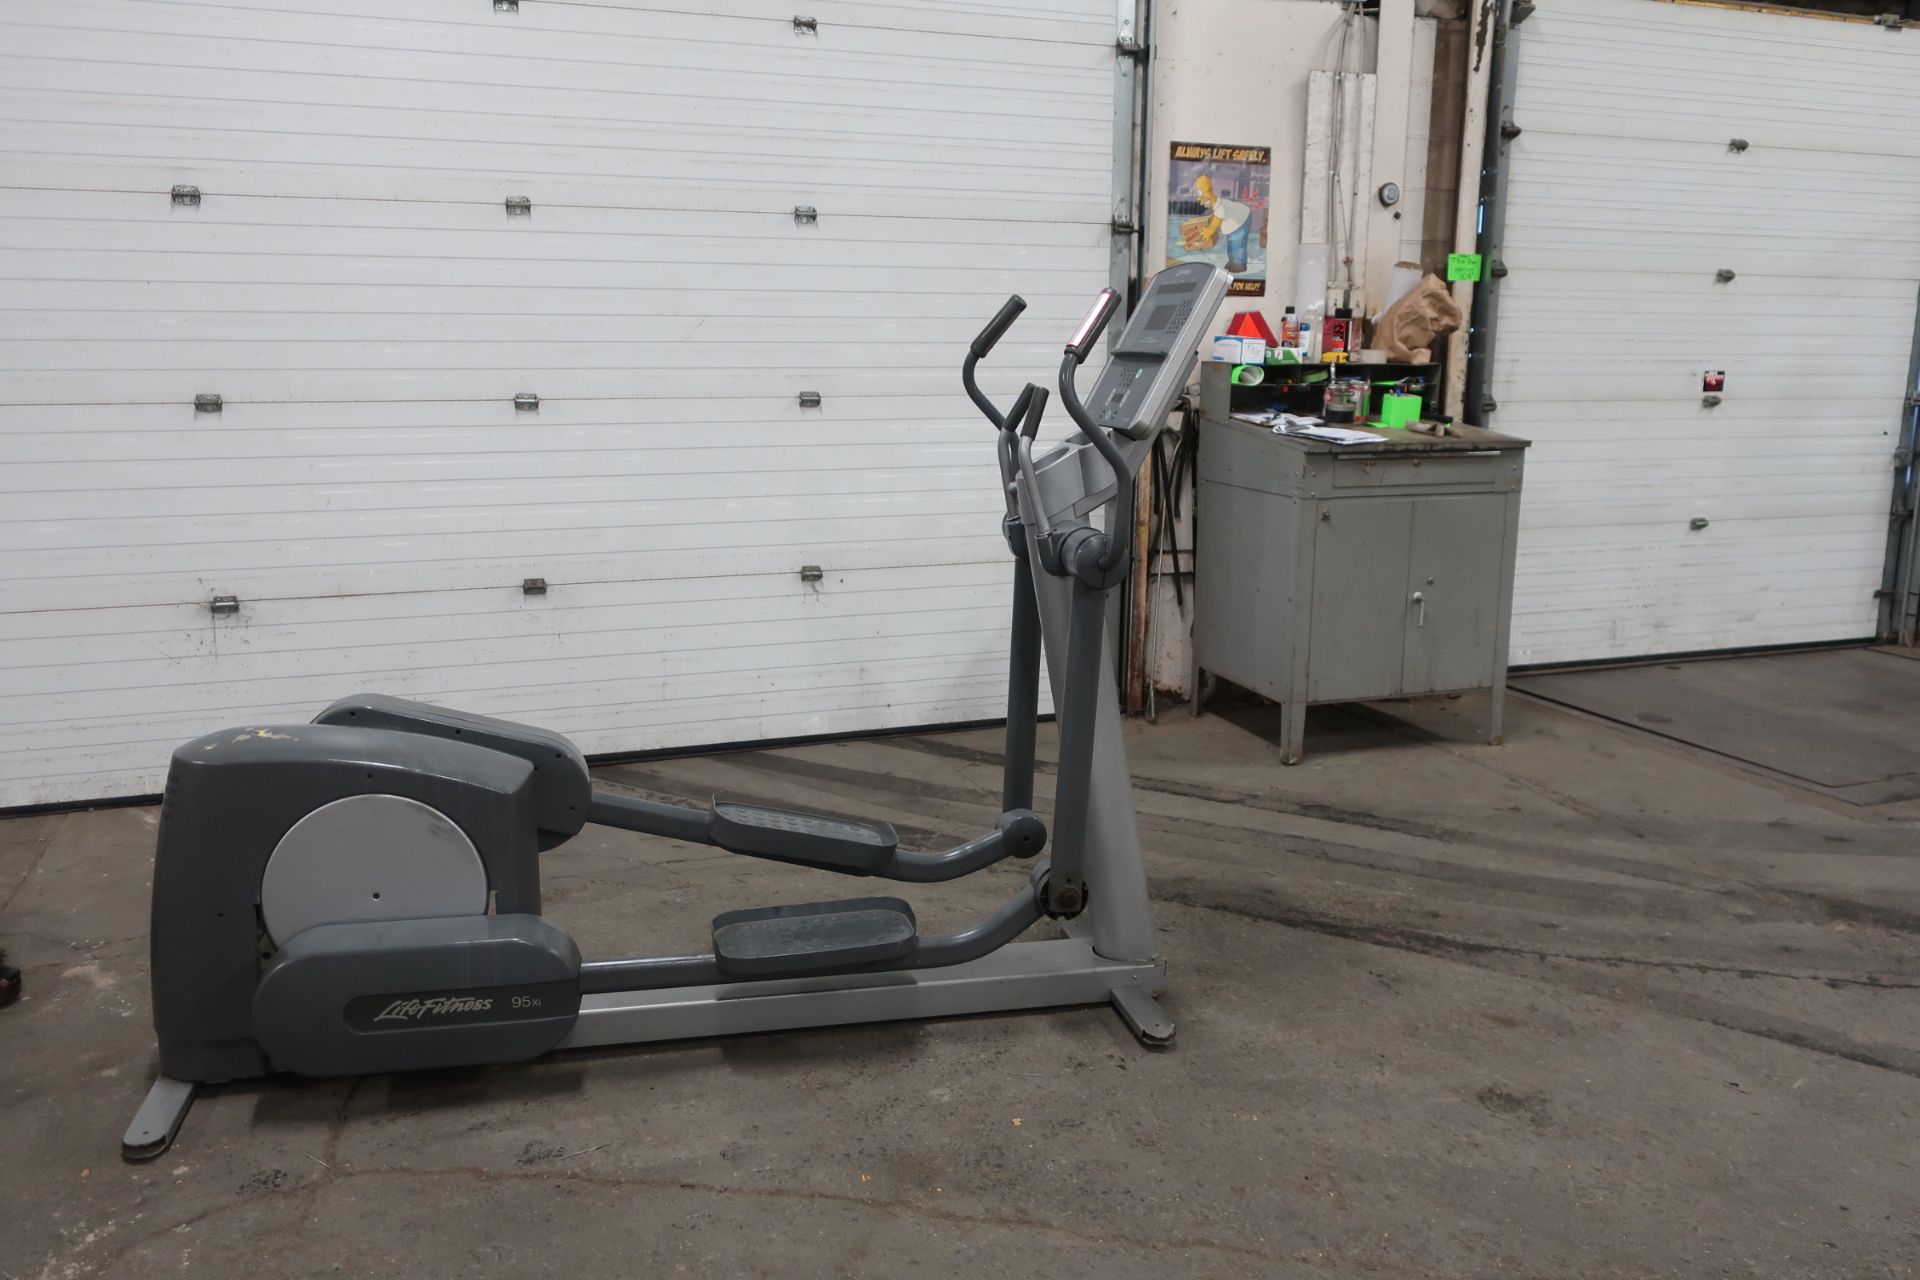 Life Fitness model 95XI Elliptical Unit - professional gym grade elliptical bike - Image 2 of 2